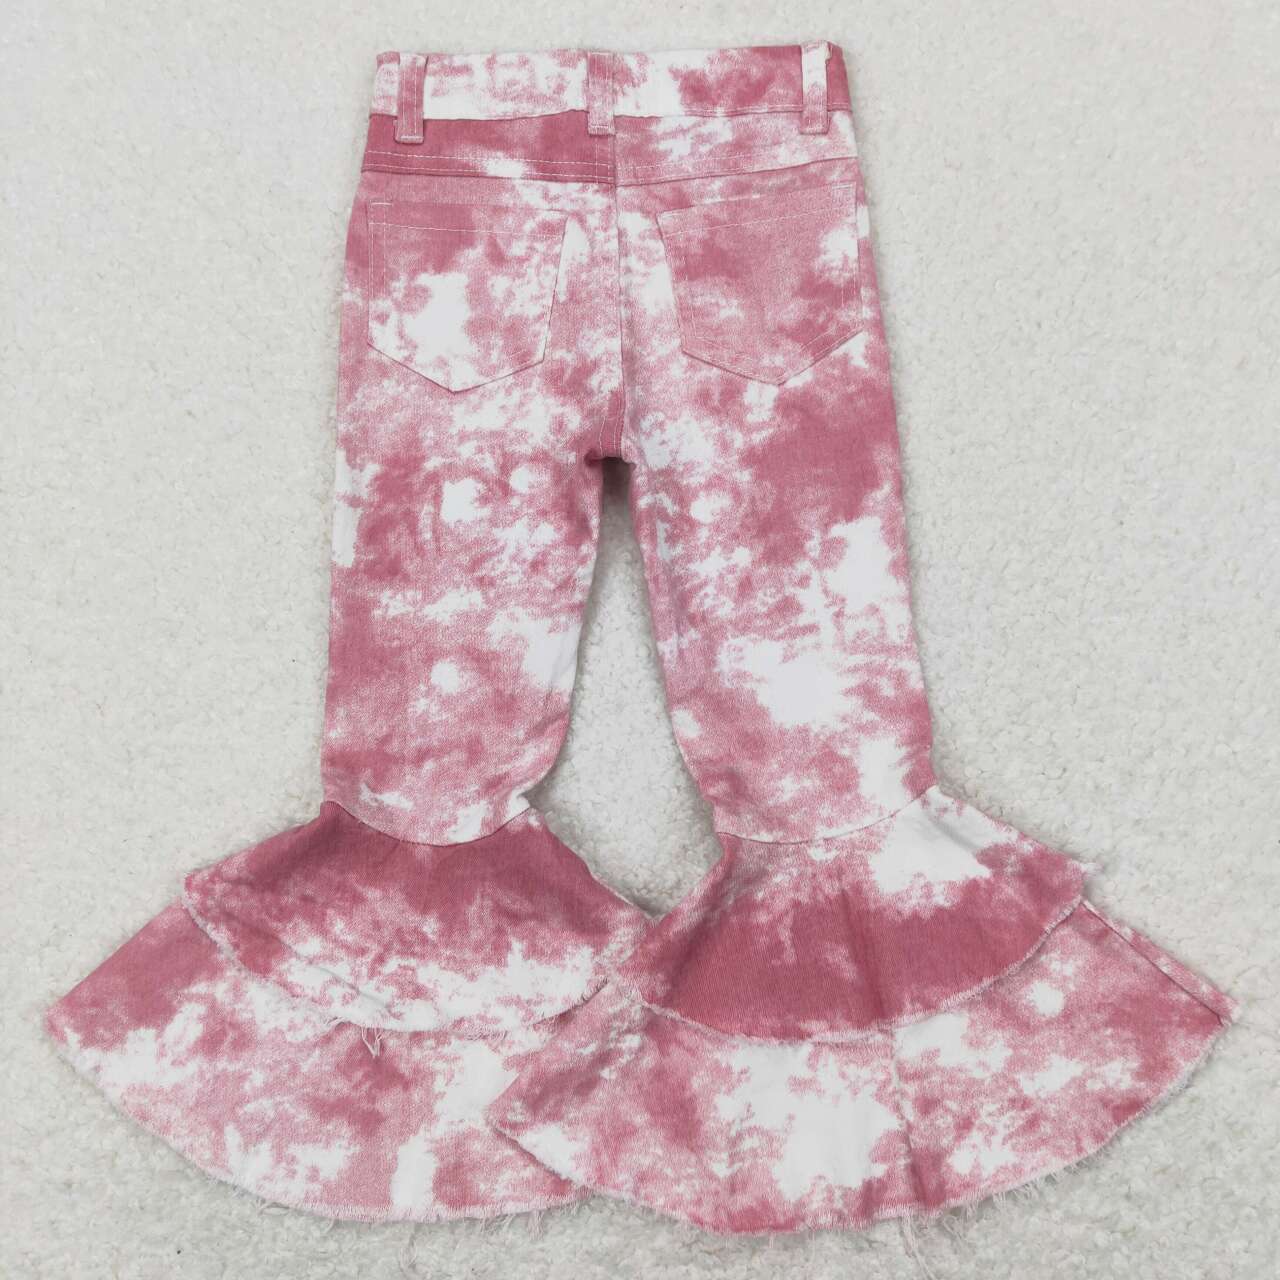 P0399 pink tie dye double lace jeans